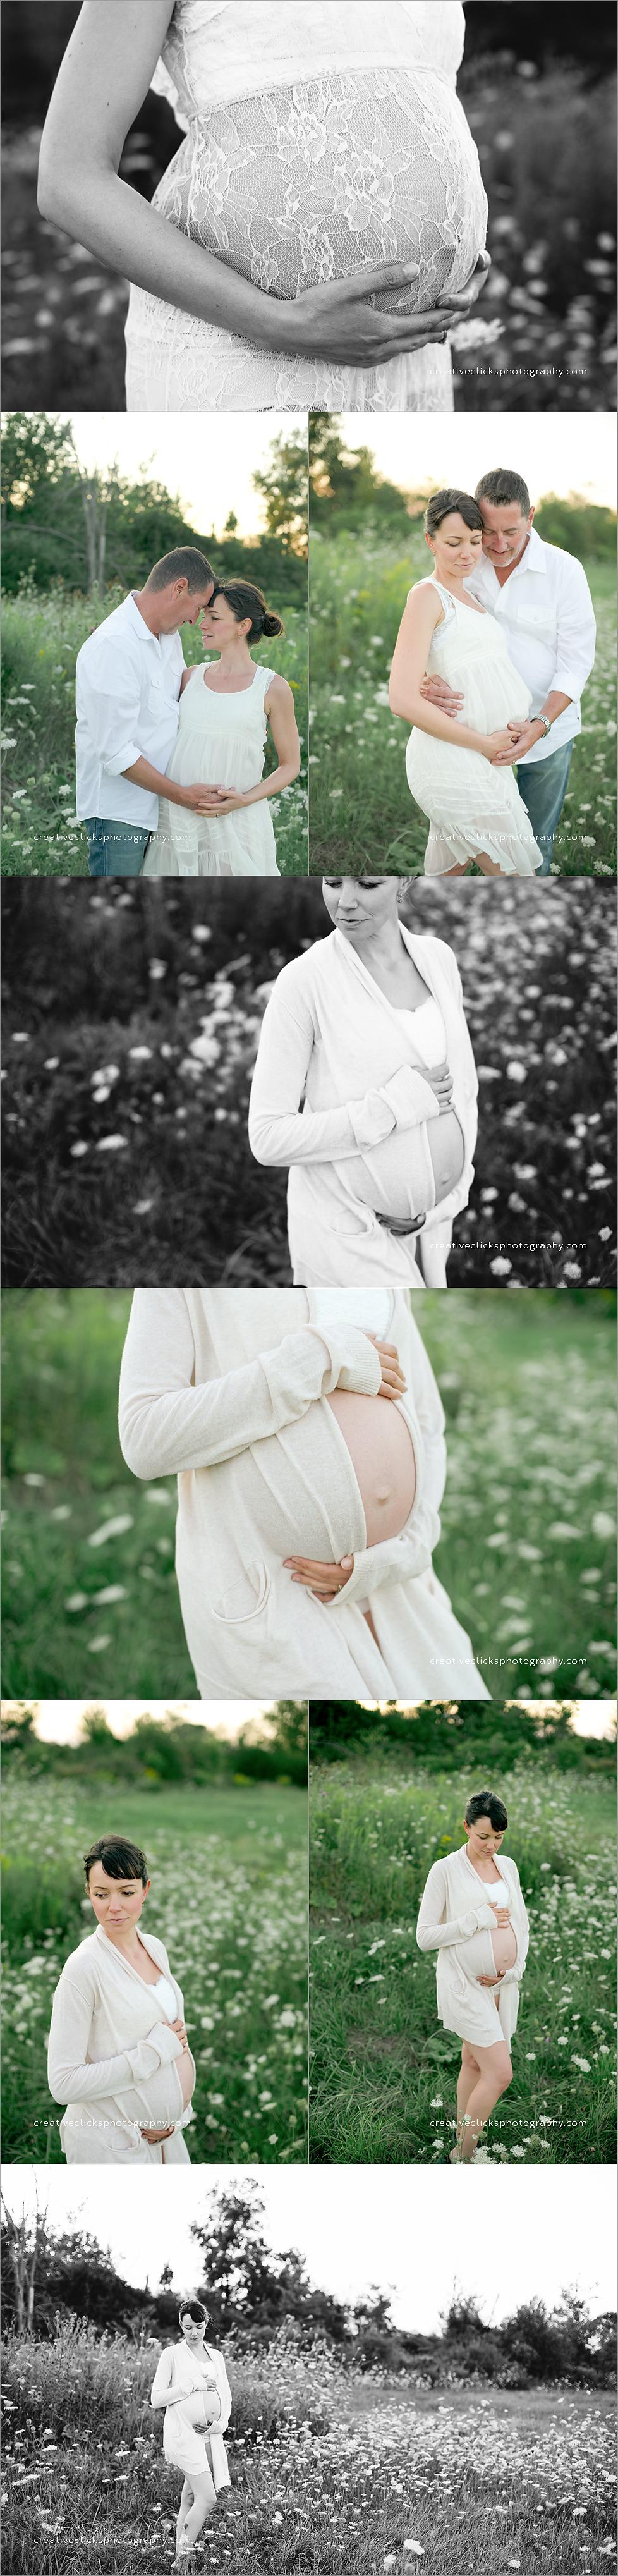 teresa-niagara-organic-maternity-photographer